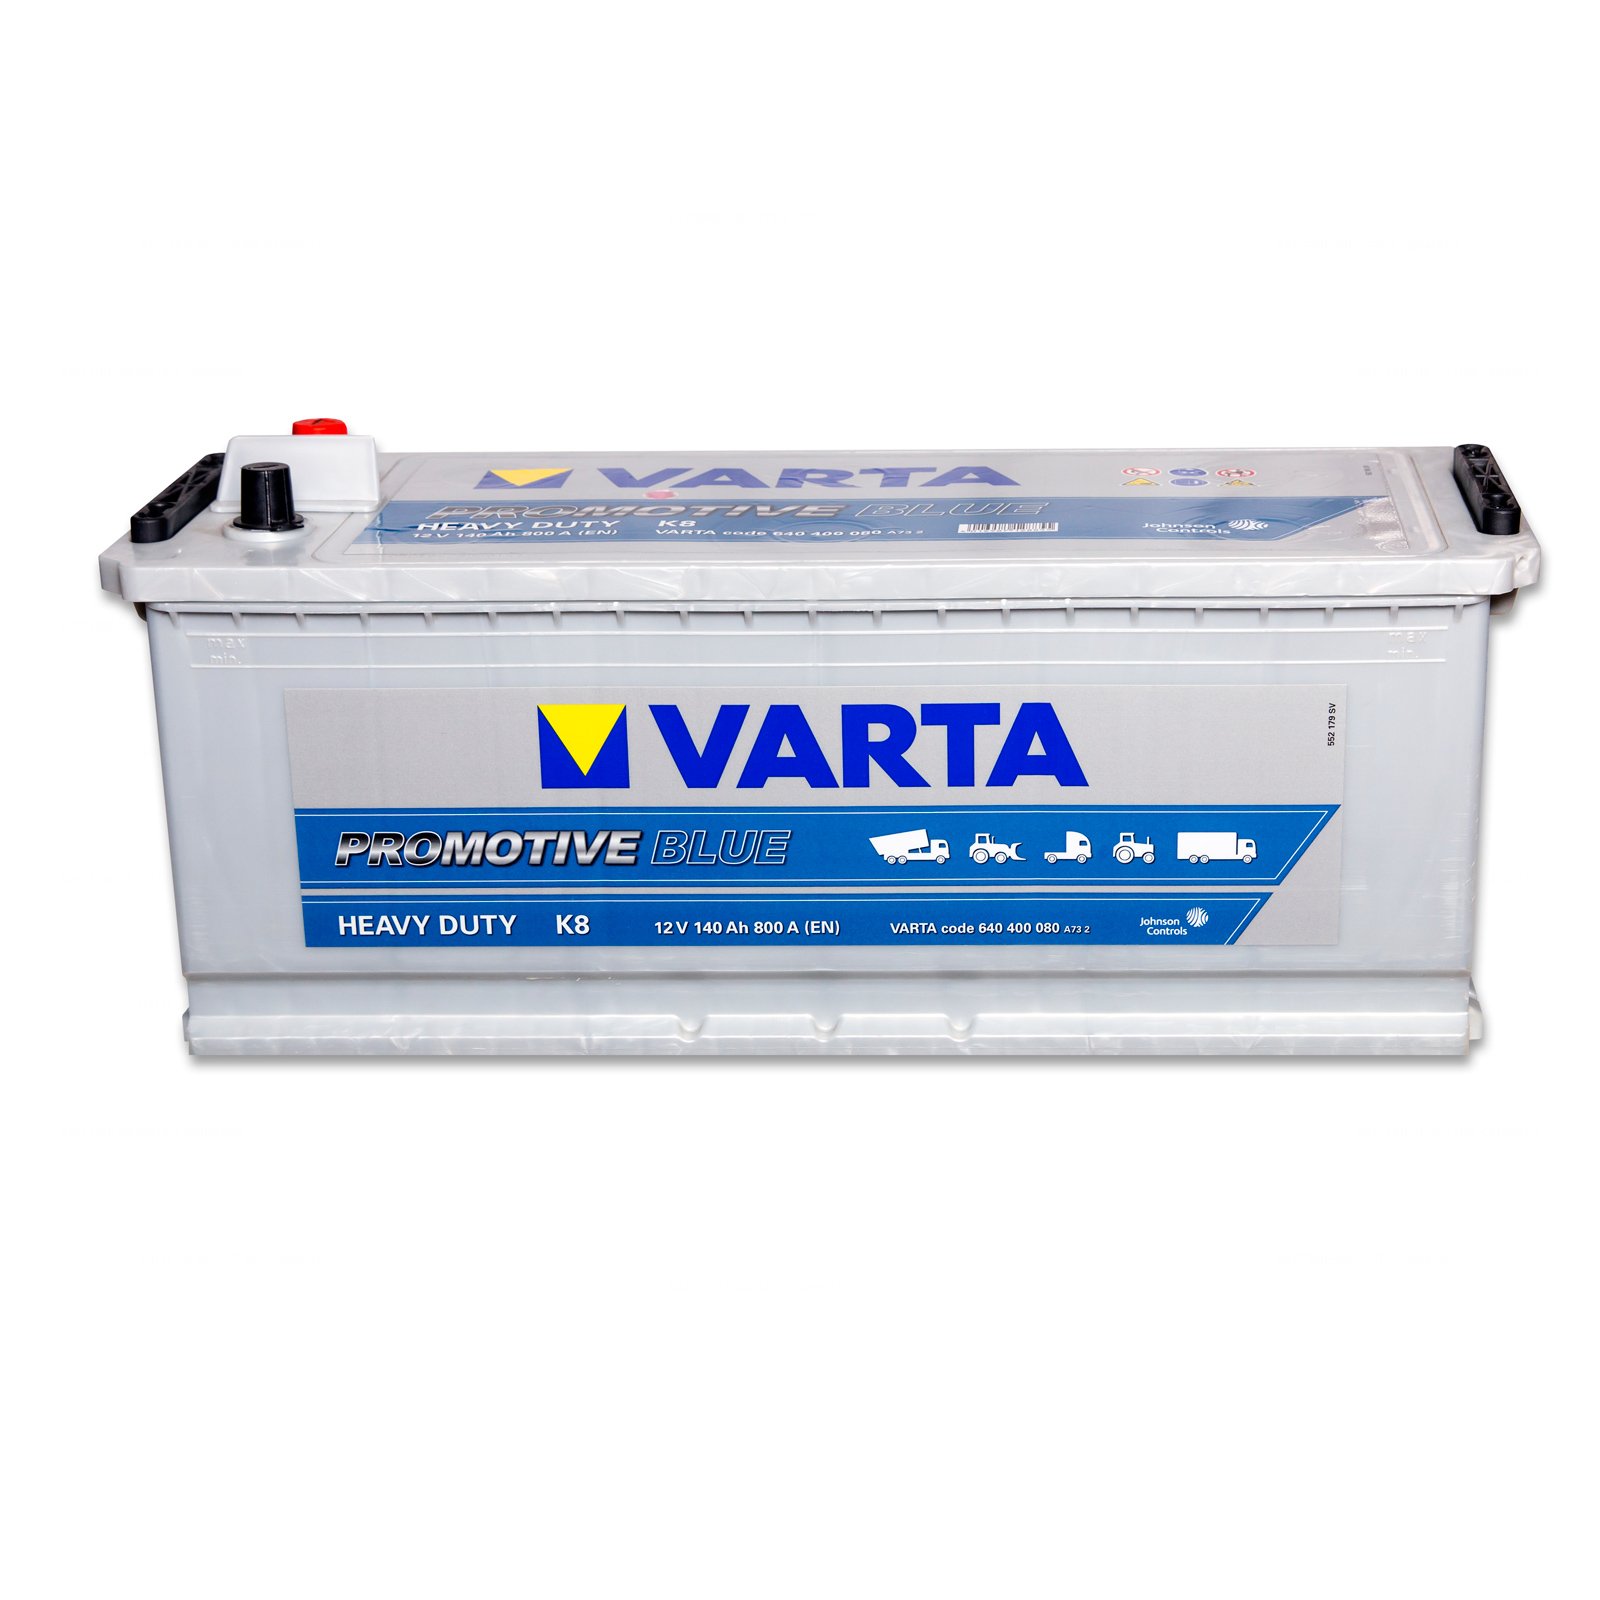 VARTA Promotive Blue K8-12 V / 140 Ah - 800 A/EN HD Nutzfahrzeugbatterie von Varta